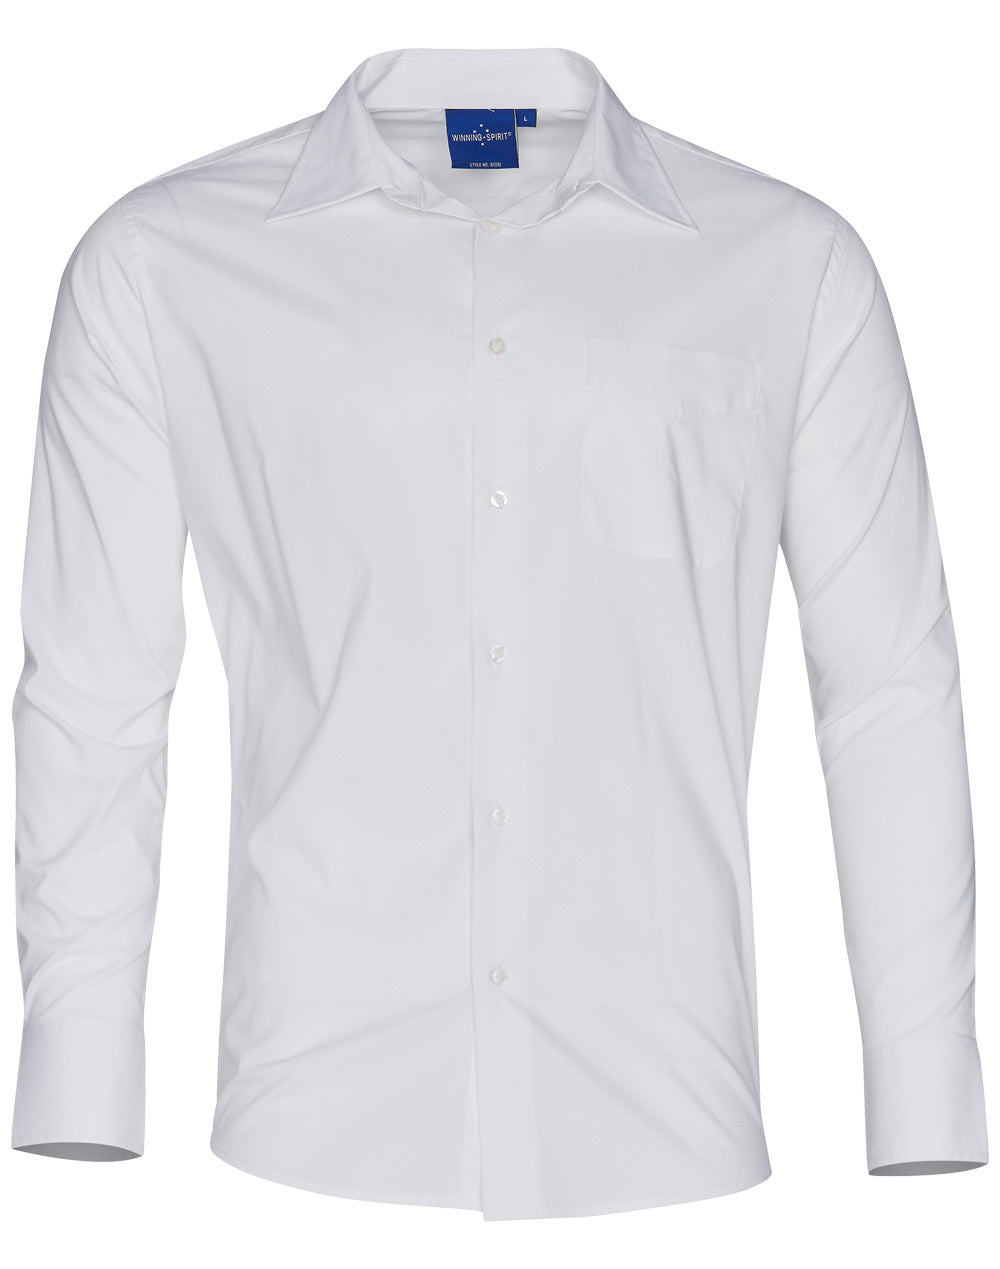 Winning Spirit Men's Teflon Executive Long Sleeve Shirt (BS08L)